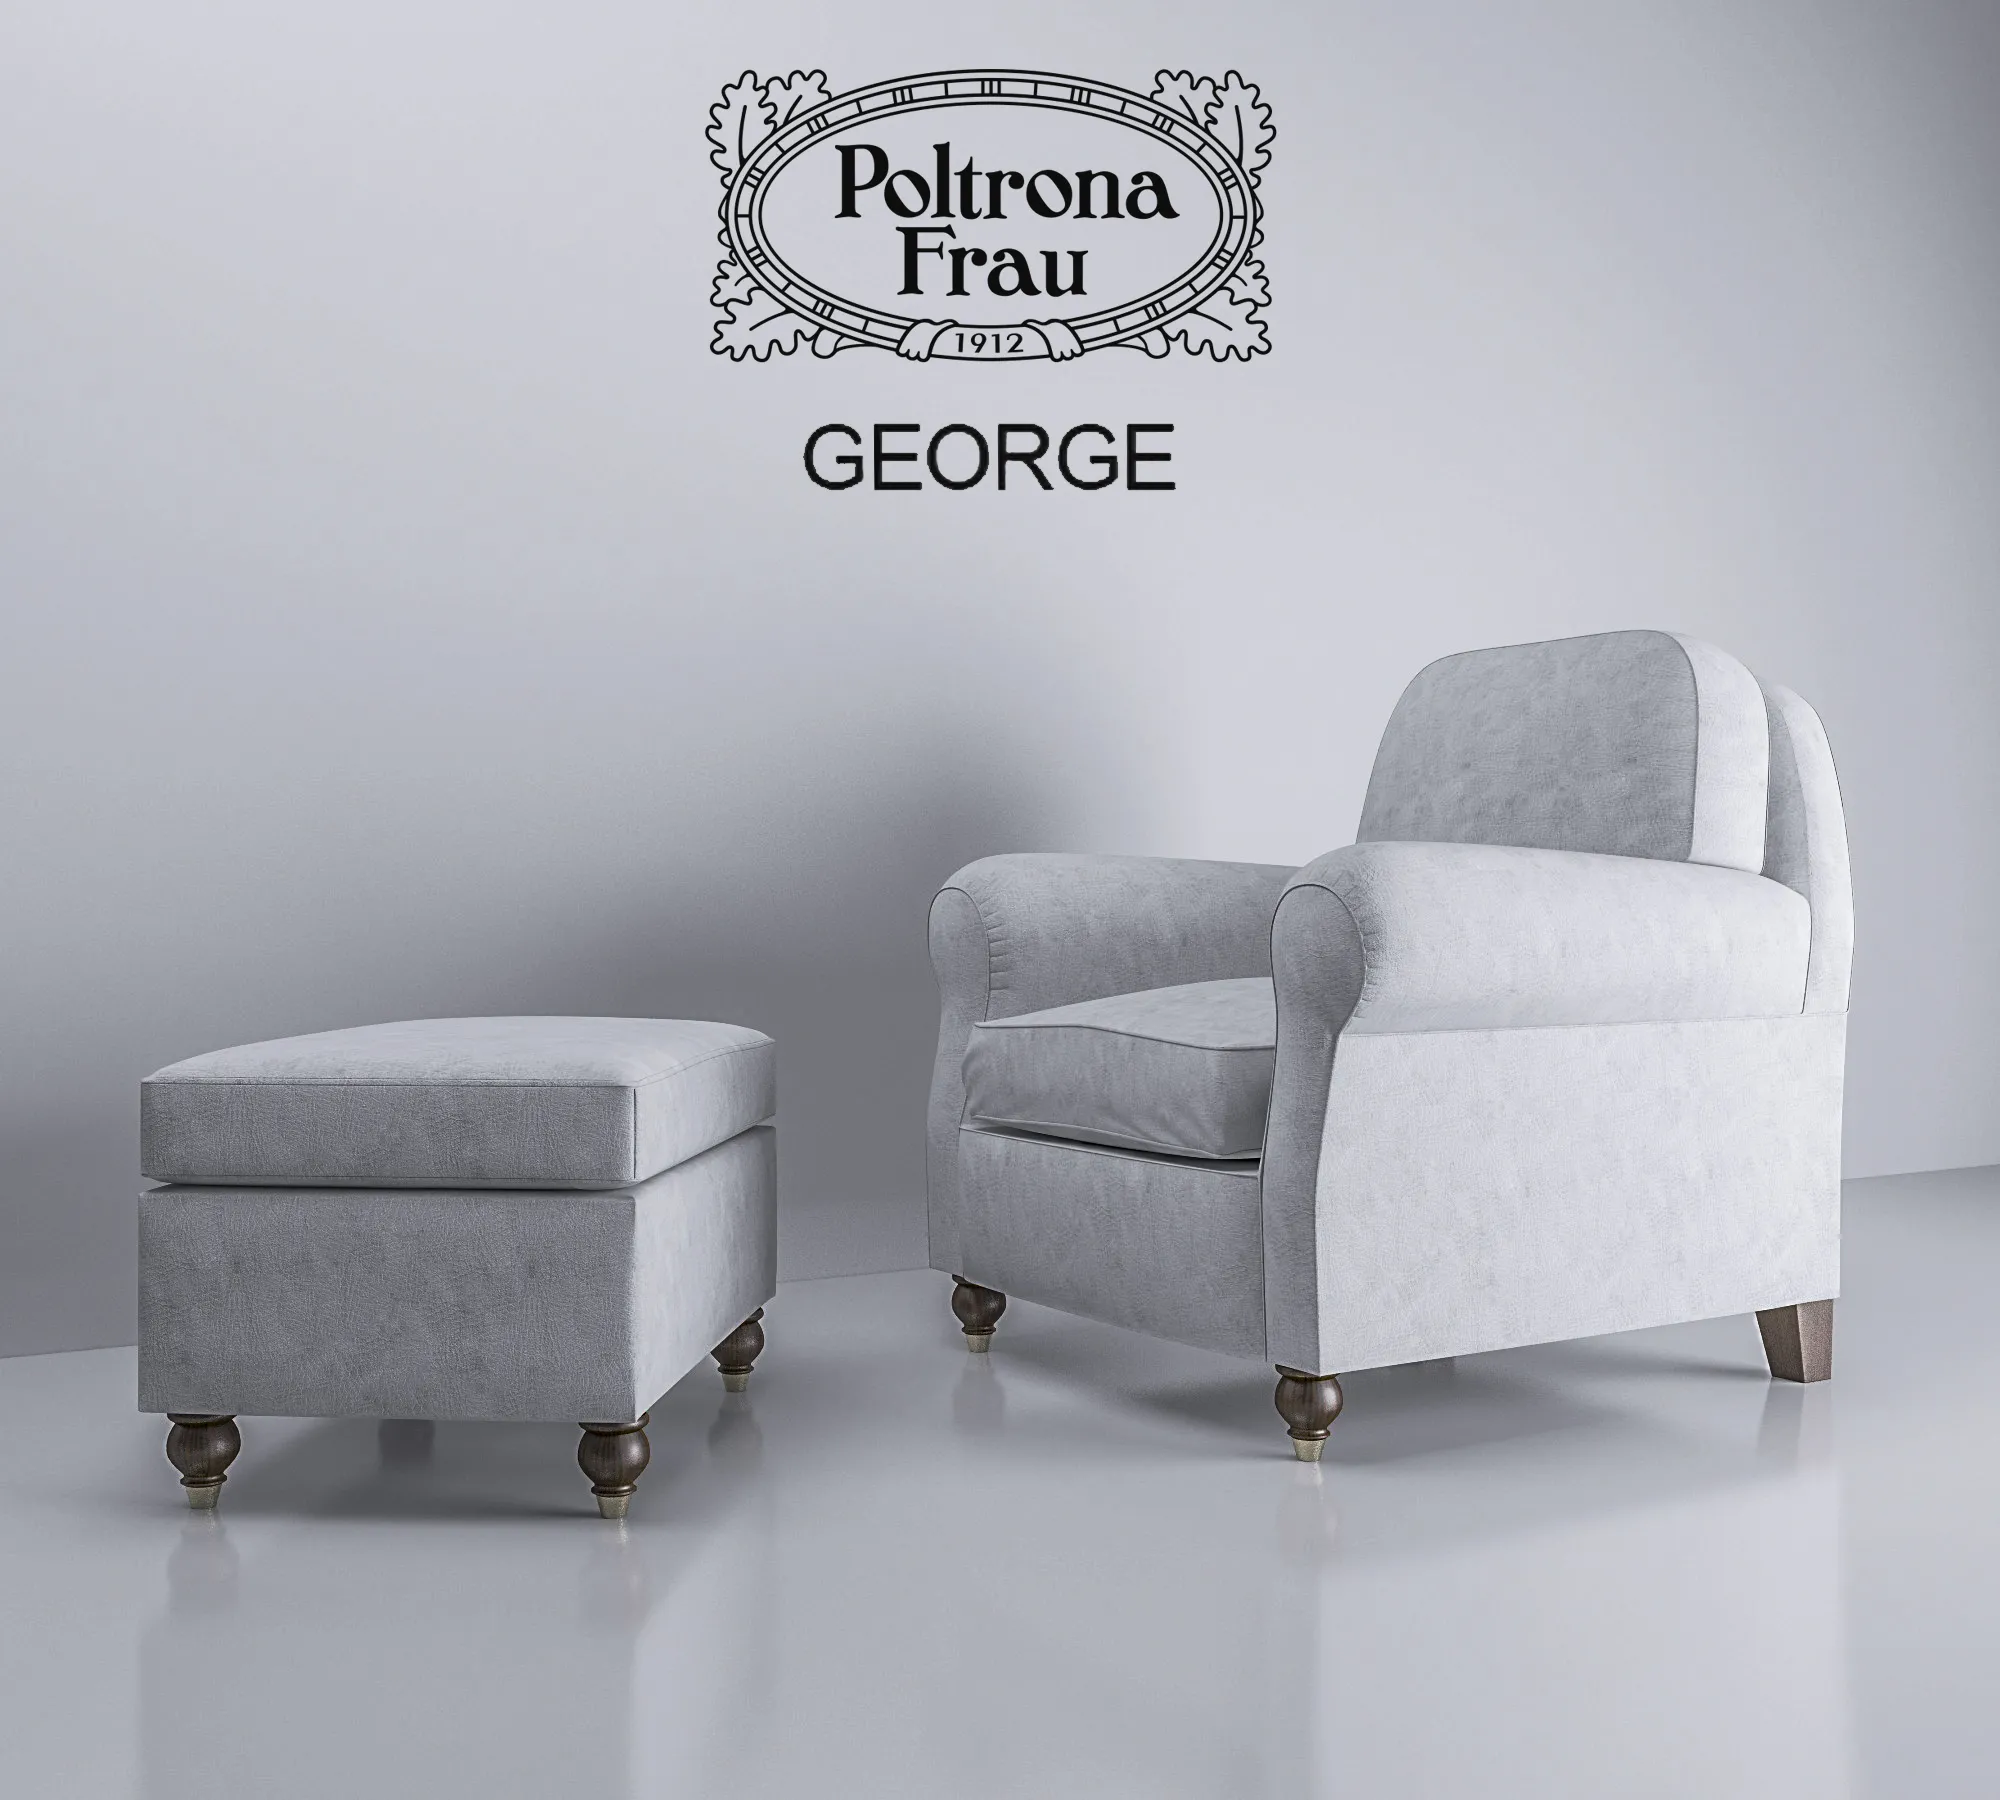 Armchair and pouffe George Poltrona Frau – 3241